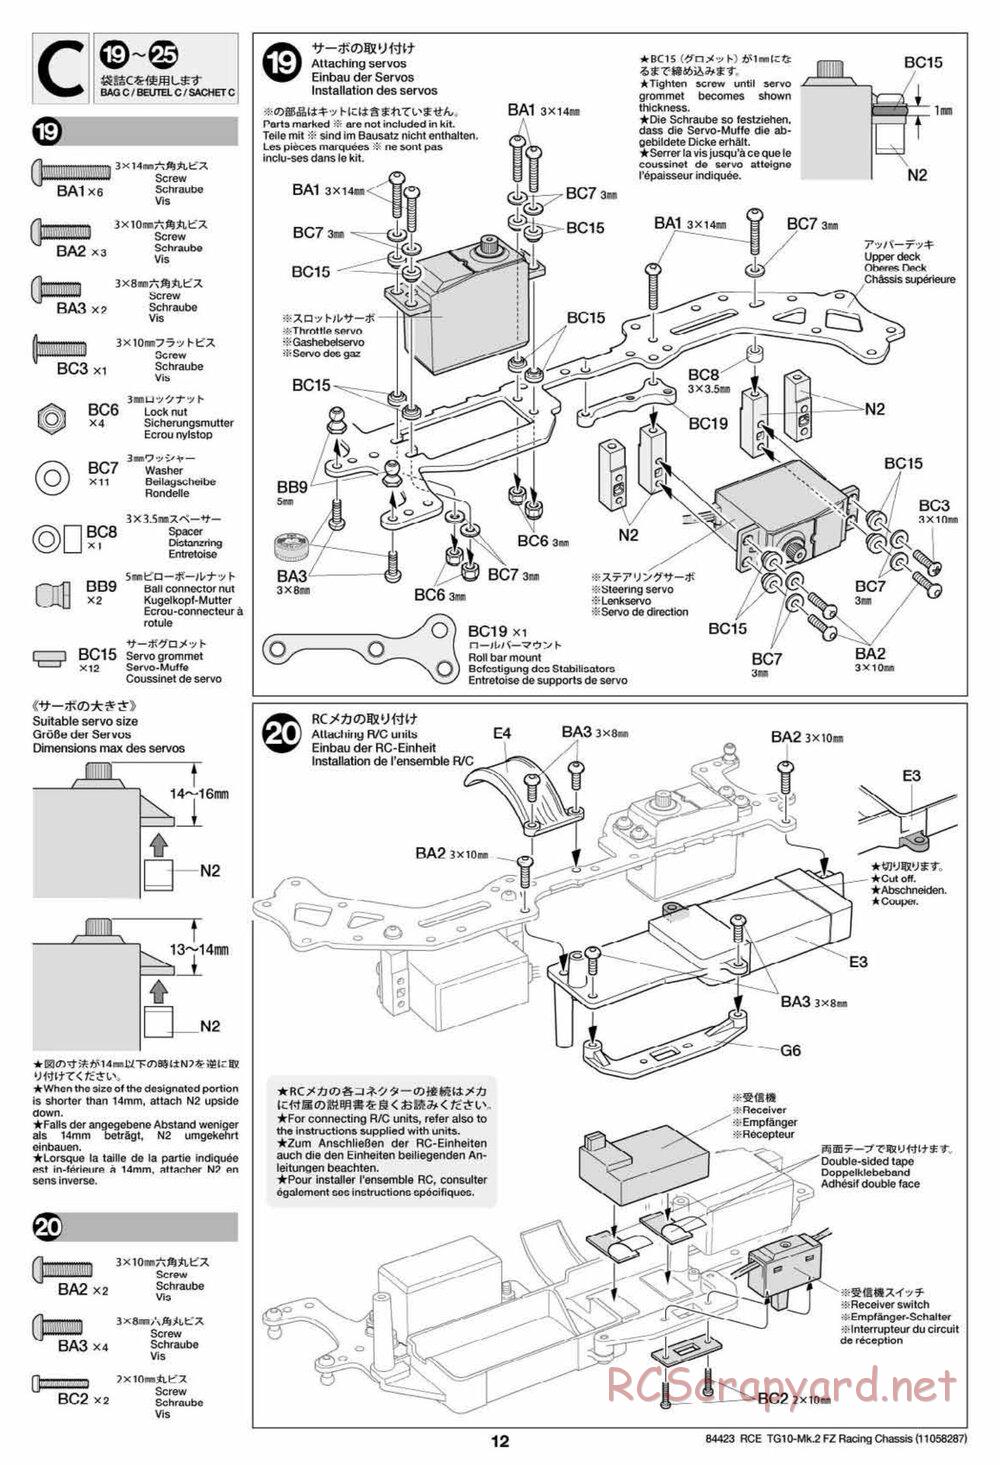 Tamiya - TG10 Mk.2 FZ Racing Chassis - Manual - Page 12